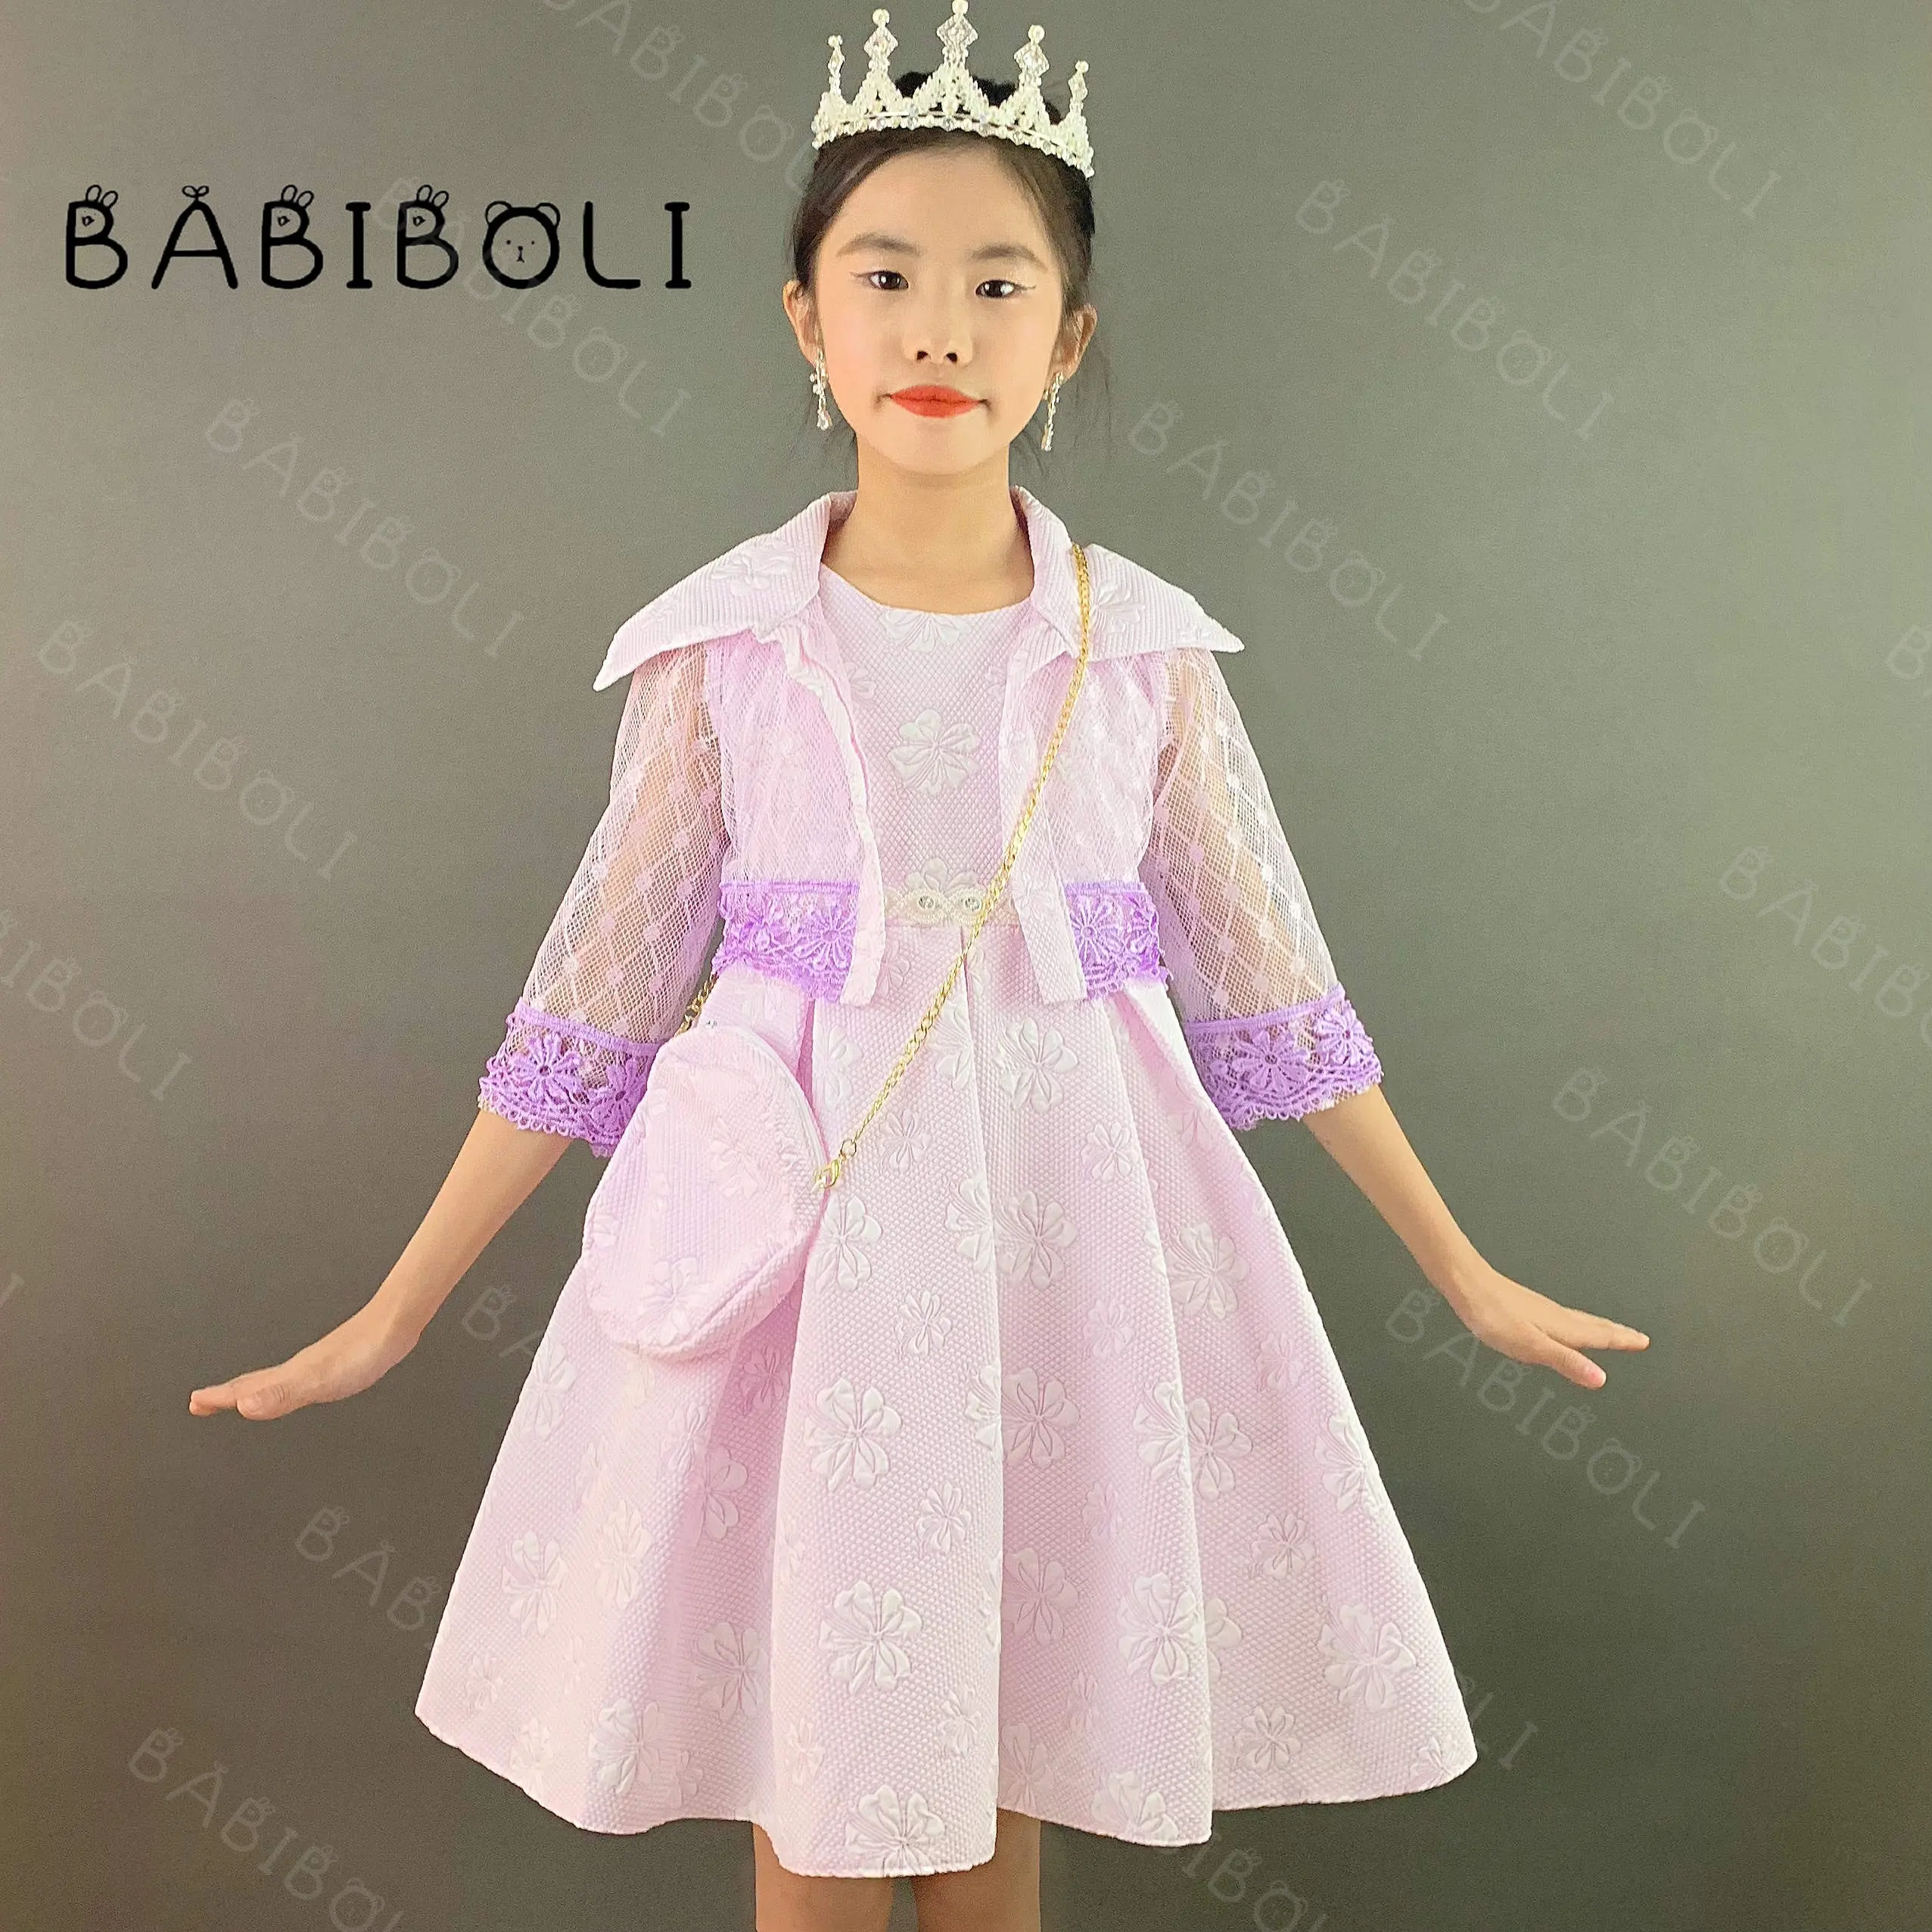 Babiboli elegante estilo niña boda vestidos morados para niños fiesta encaje con bolsa y chaqueta de encaje vestidos para niñas manga larga